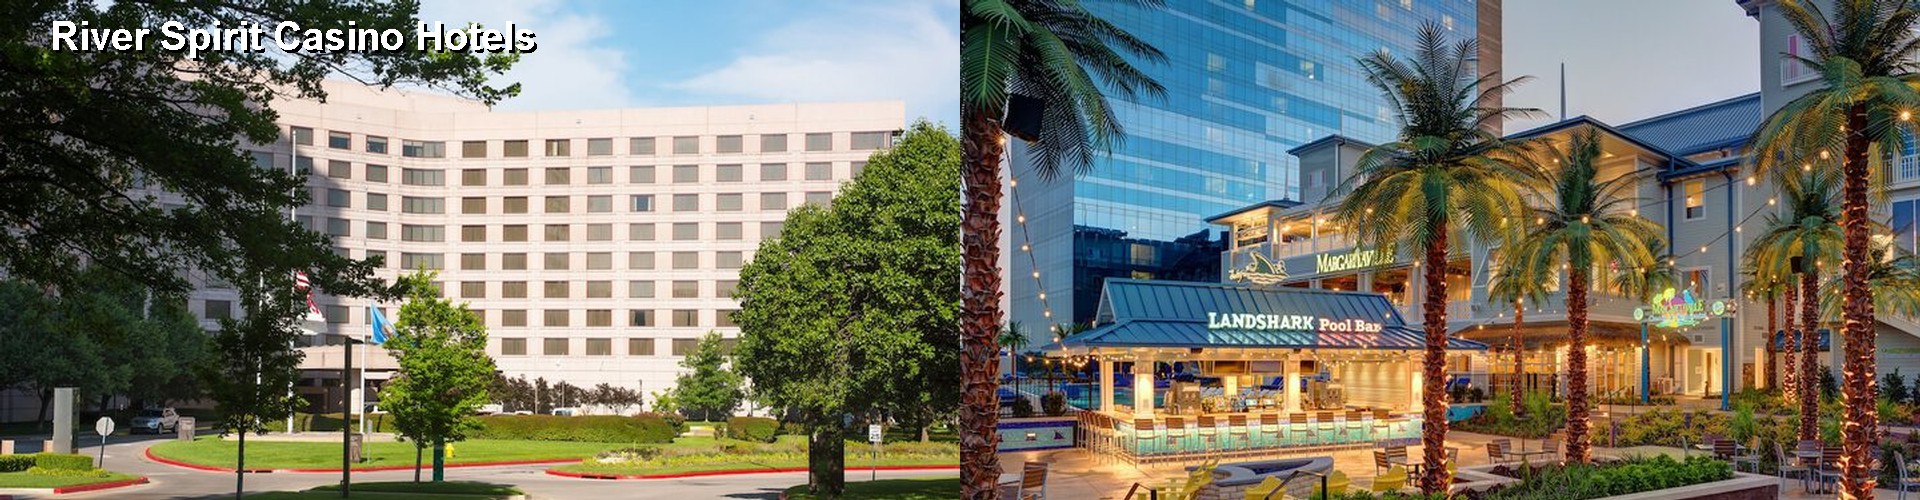 5 Best Hotels near River Spirit Casino